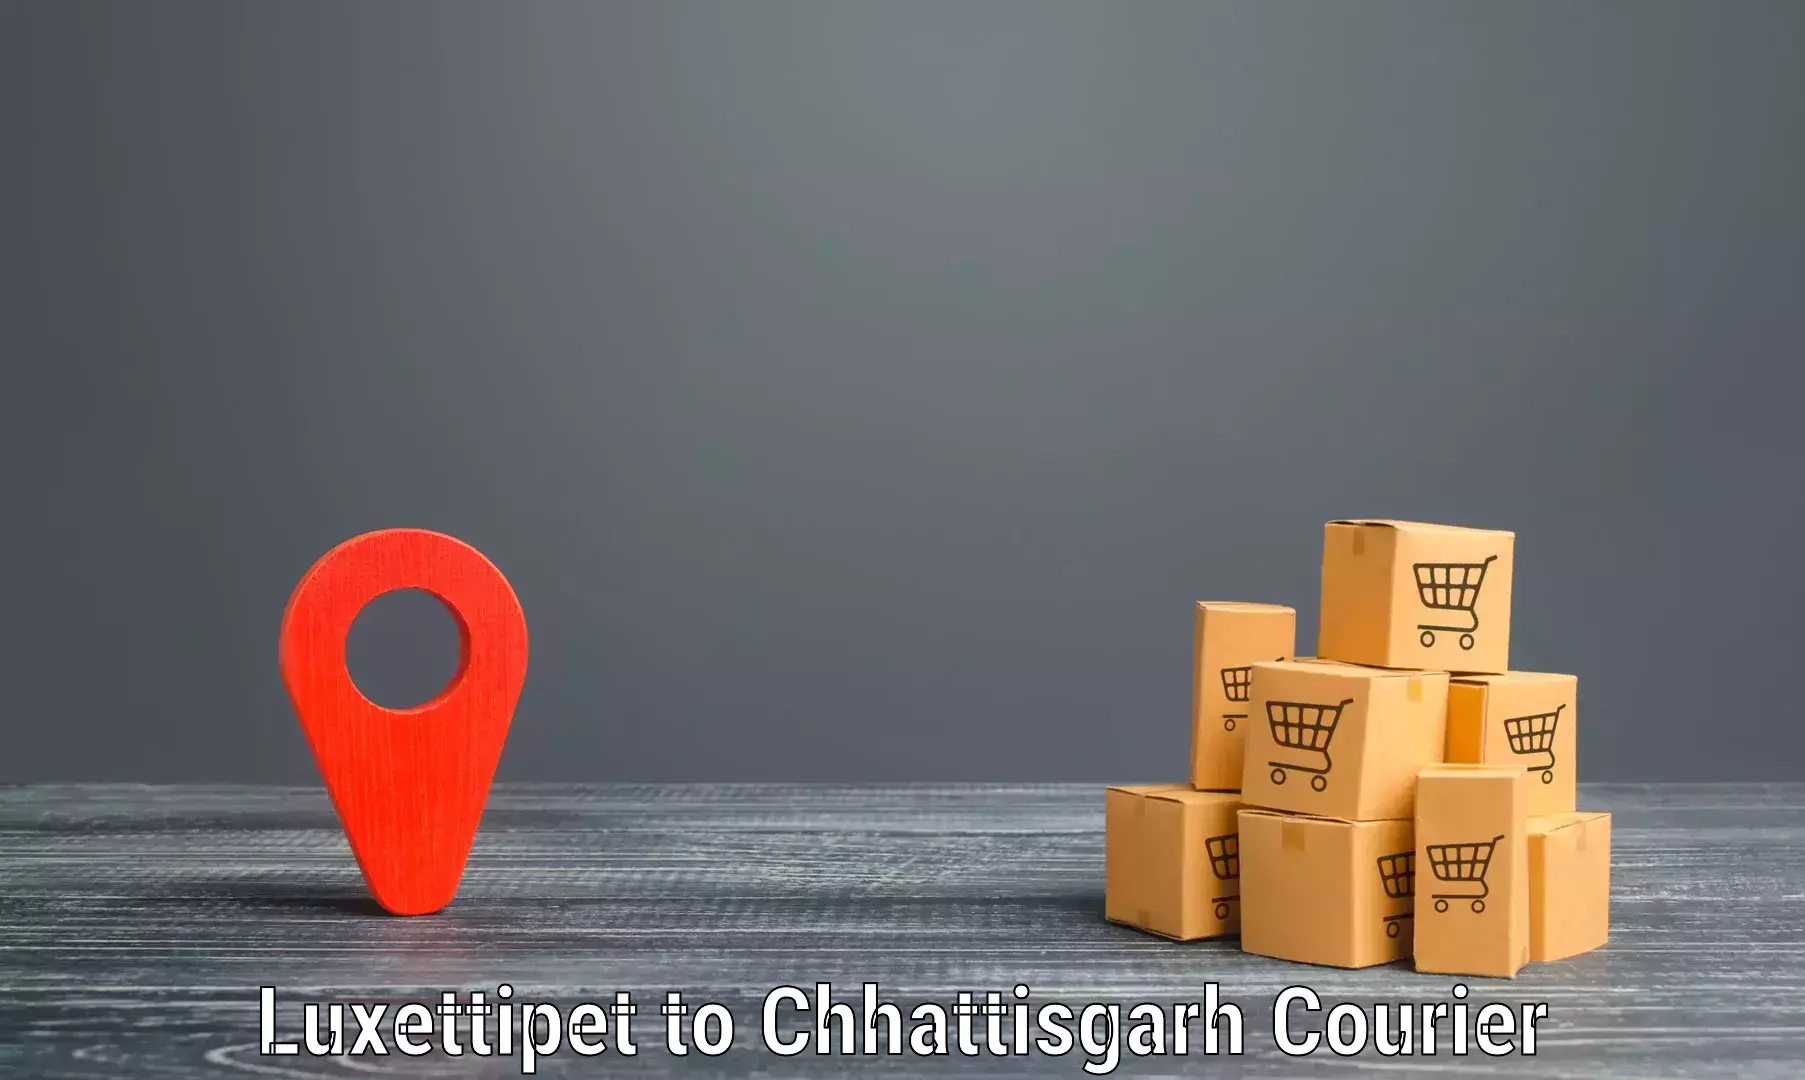 Express logistics in Luxettipet to Bijapur Chhattisgarh